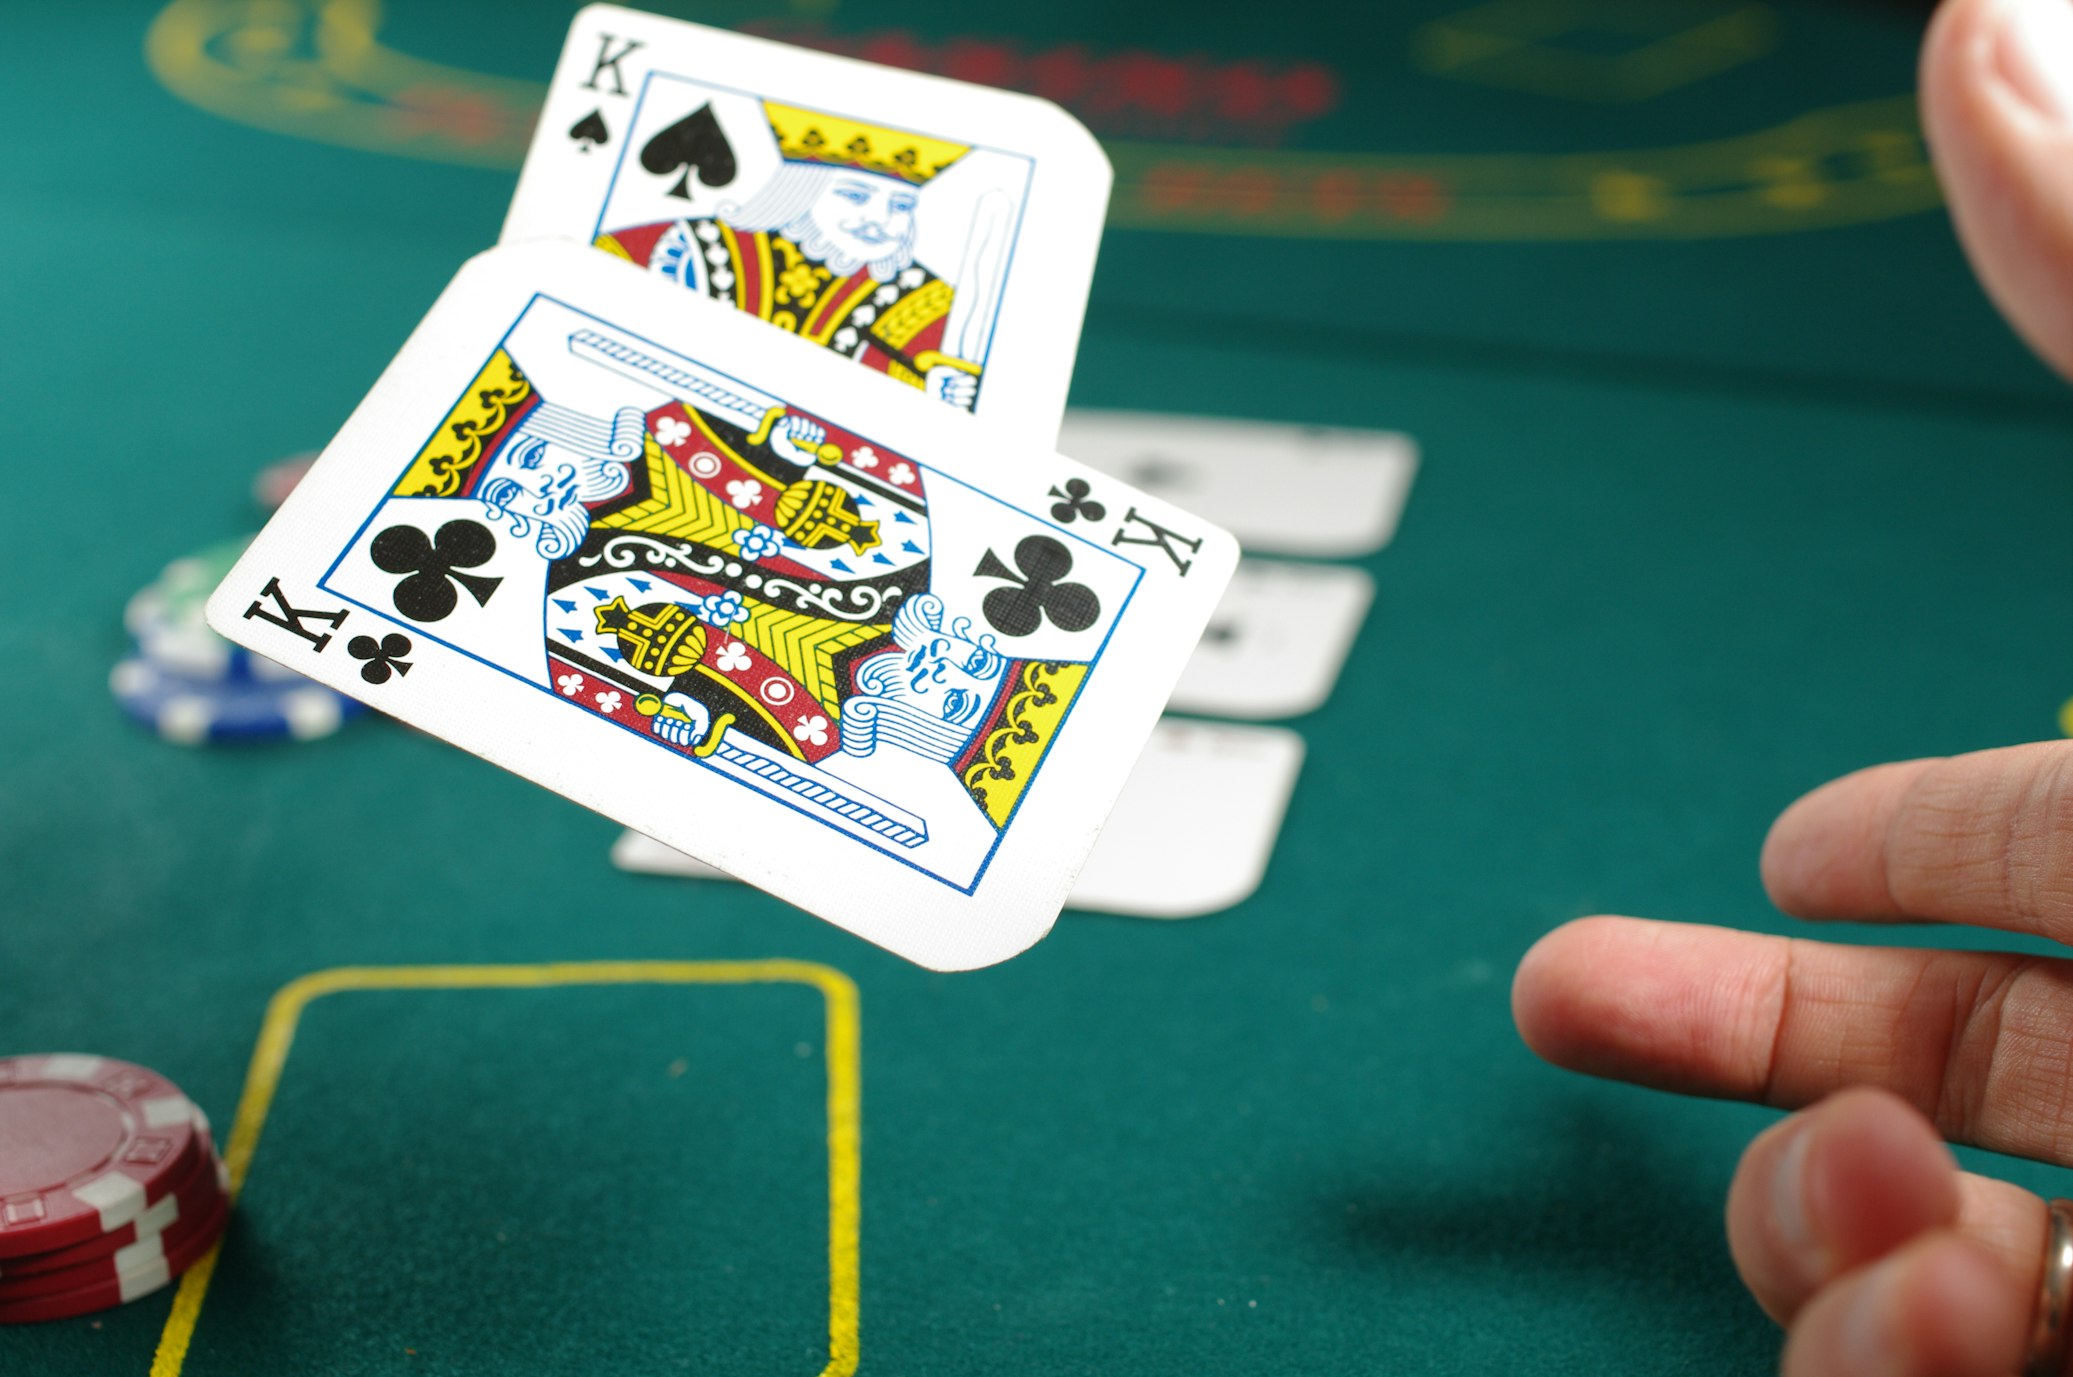 casino bonuses free spins